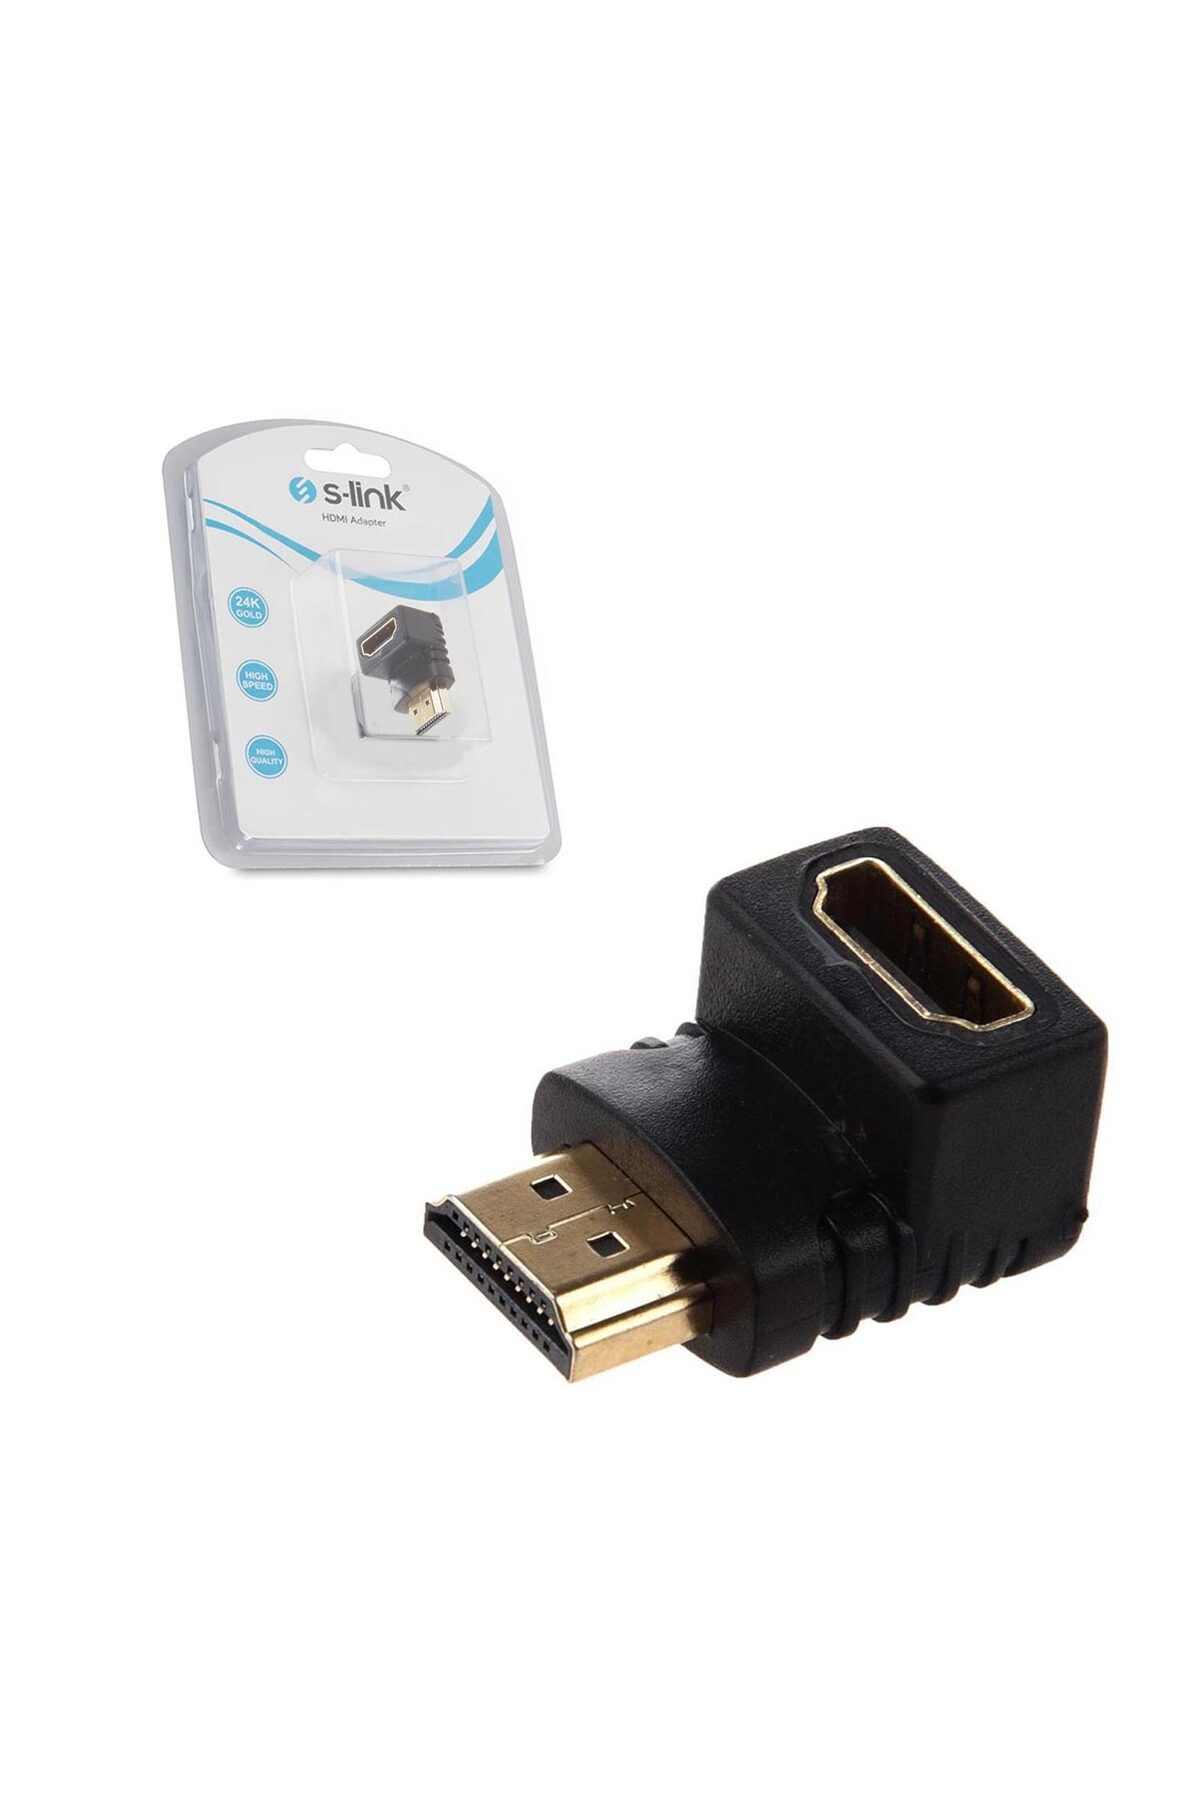 S-Link HDMI ARA APARAT ERKEK DİŞİ L TİP S-LİNK SLX-983